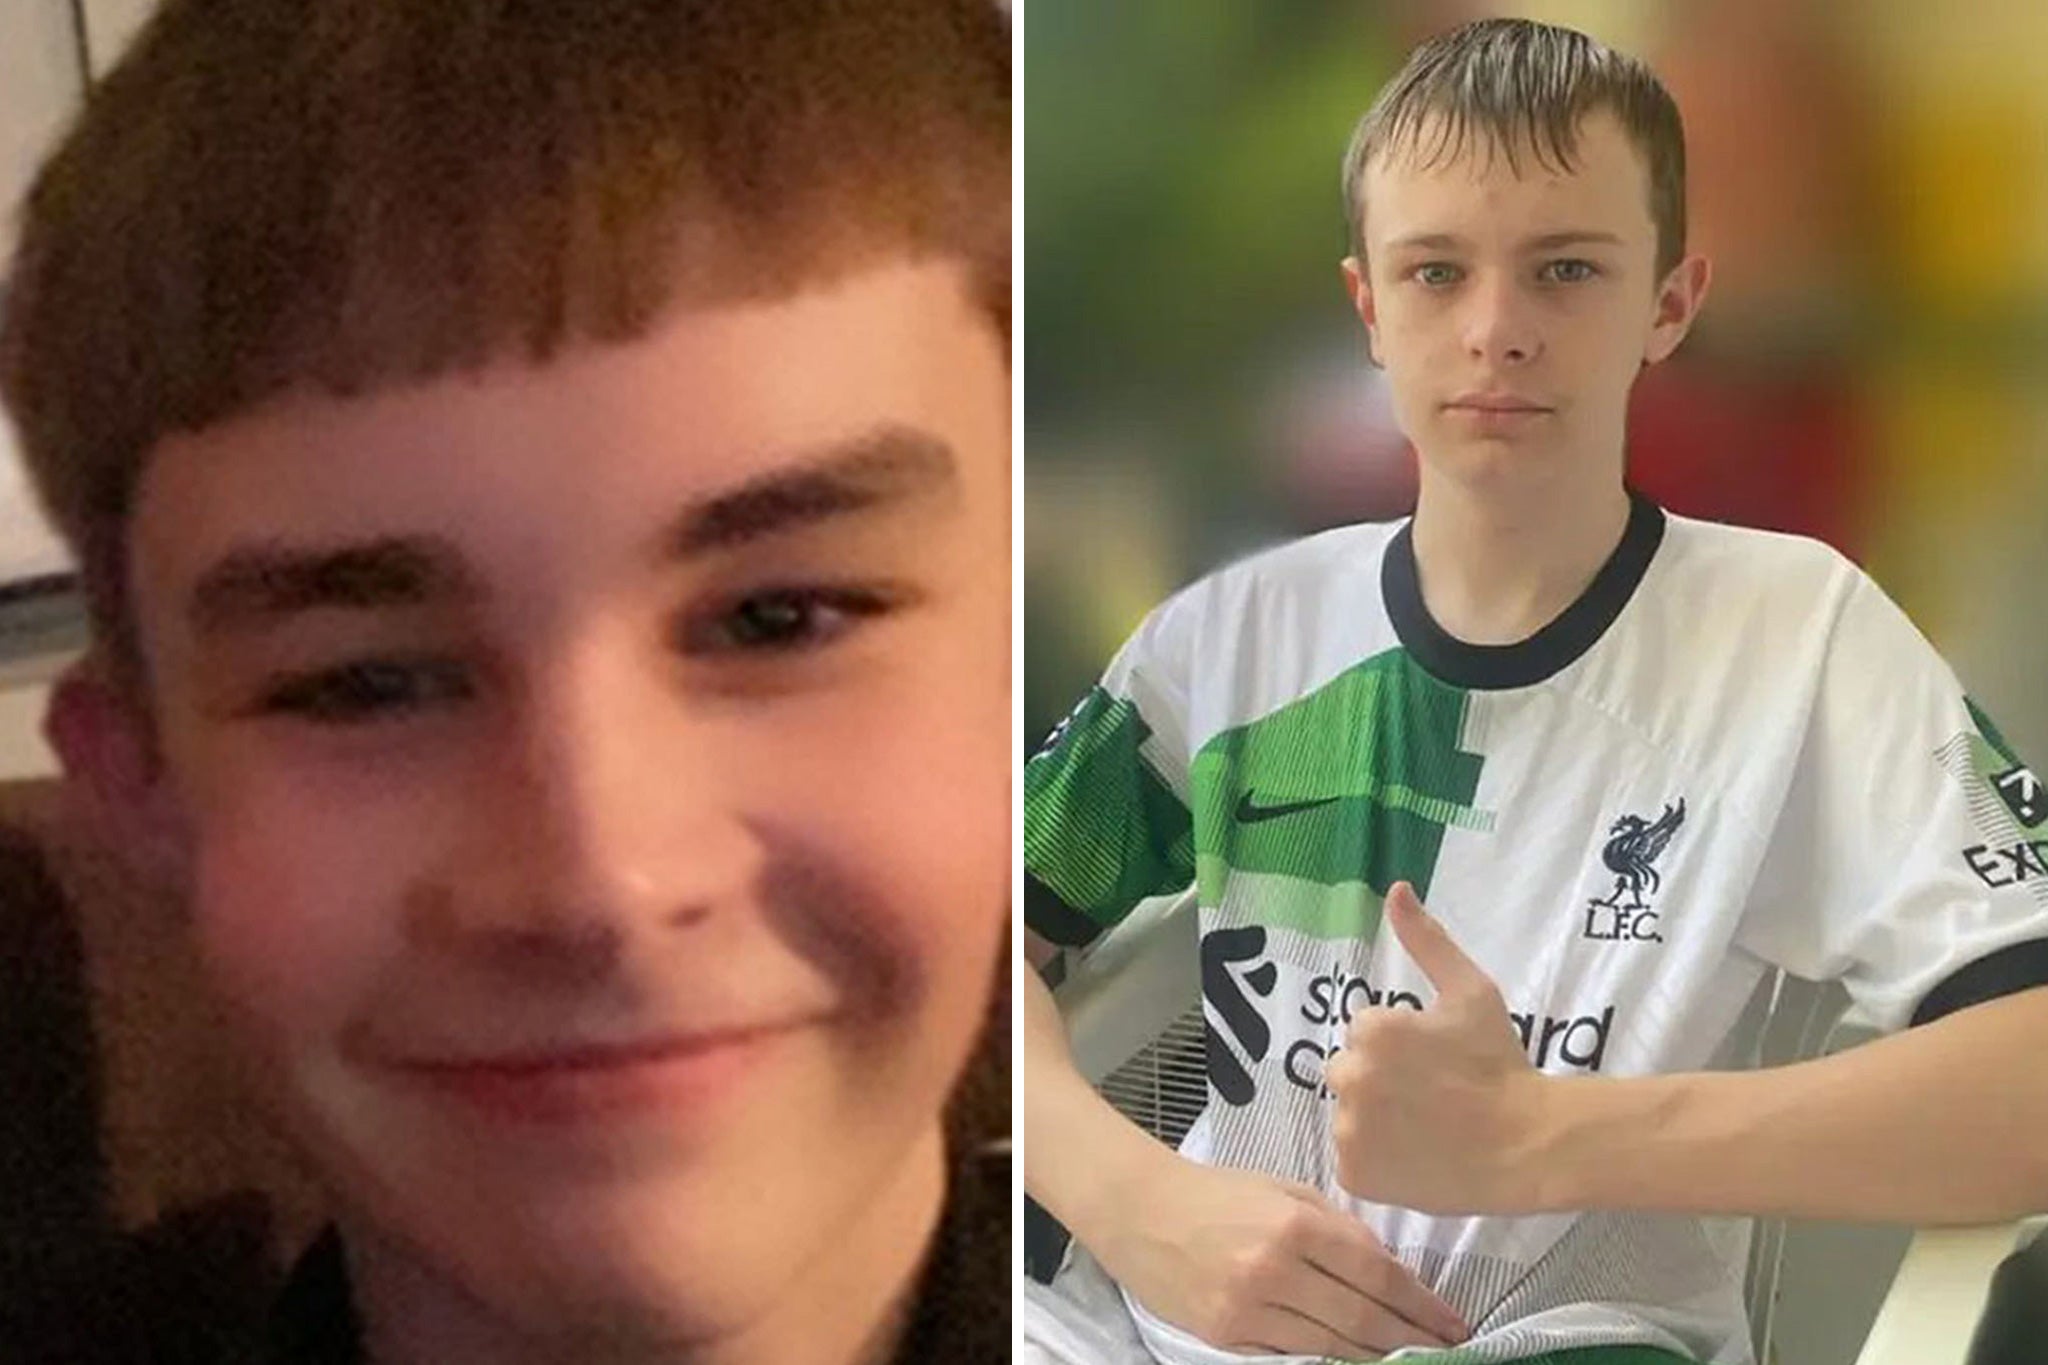 Max Dixon, 16, and Mason Rist, 15, were attacked in Bristol at about 11.20pm on Saturday